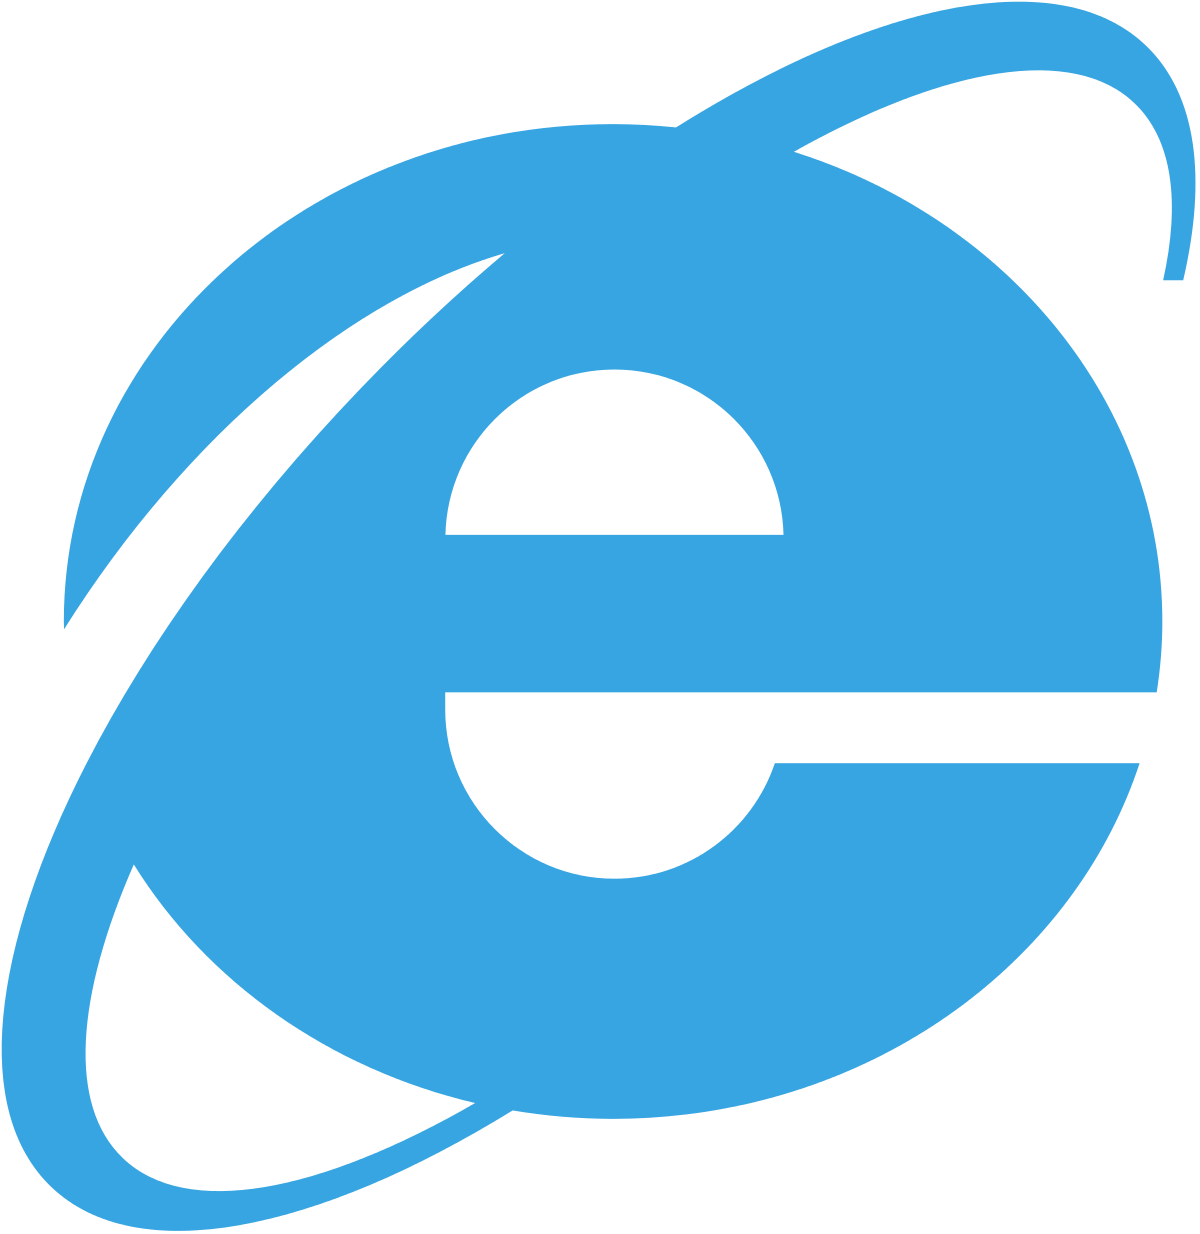 Internet Explorer Logo - Internet Explorer | Logopedia | FANDOM powered by Wikia